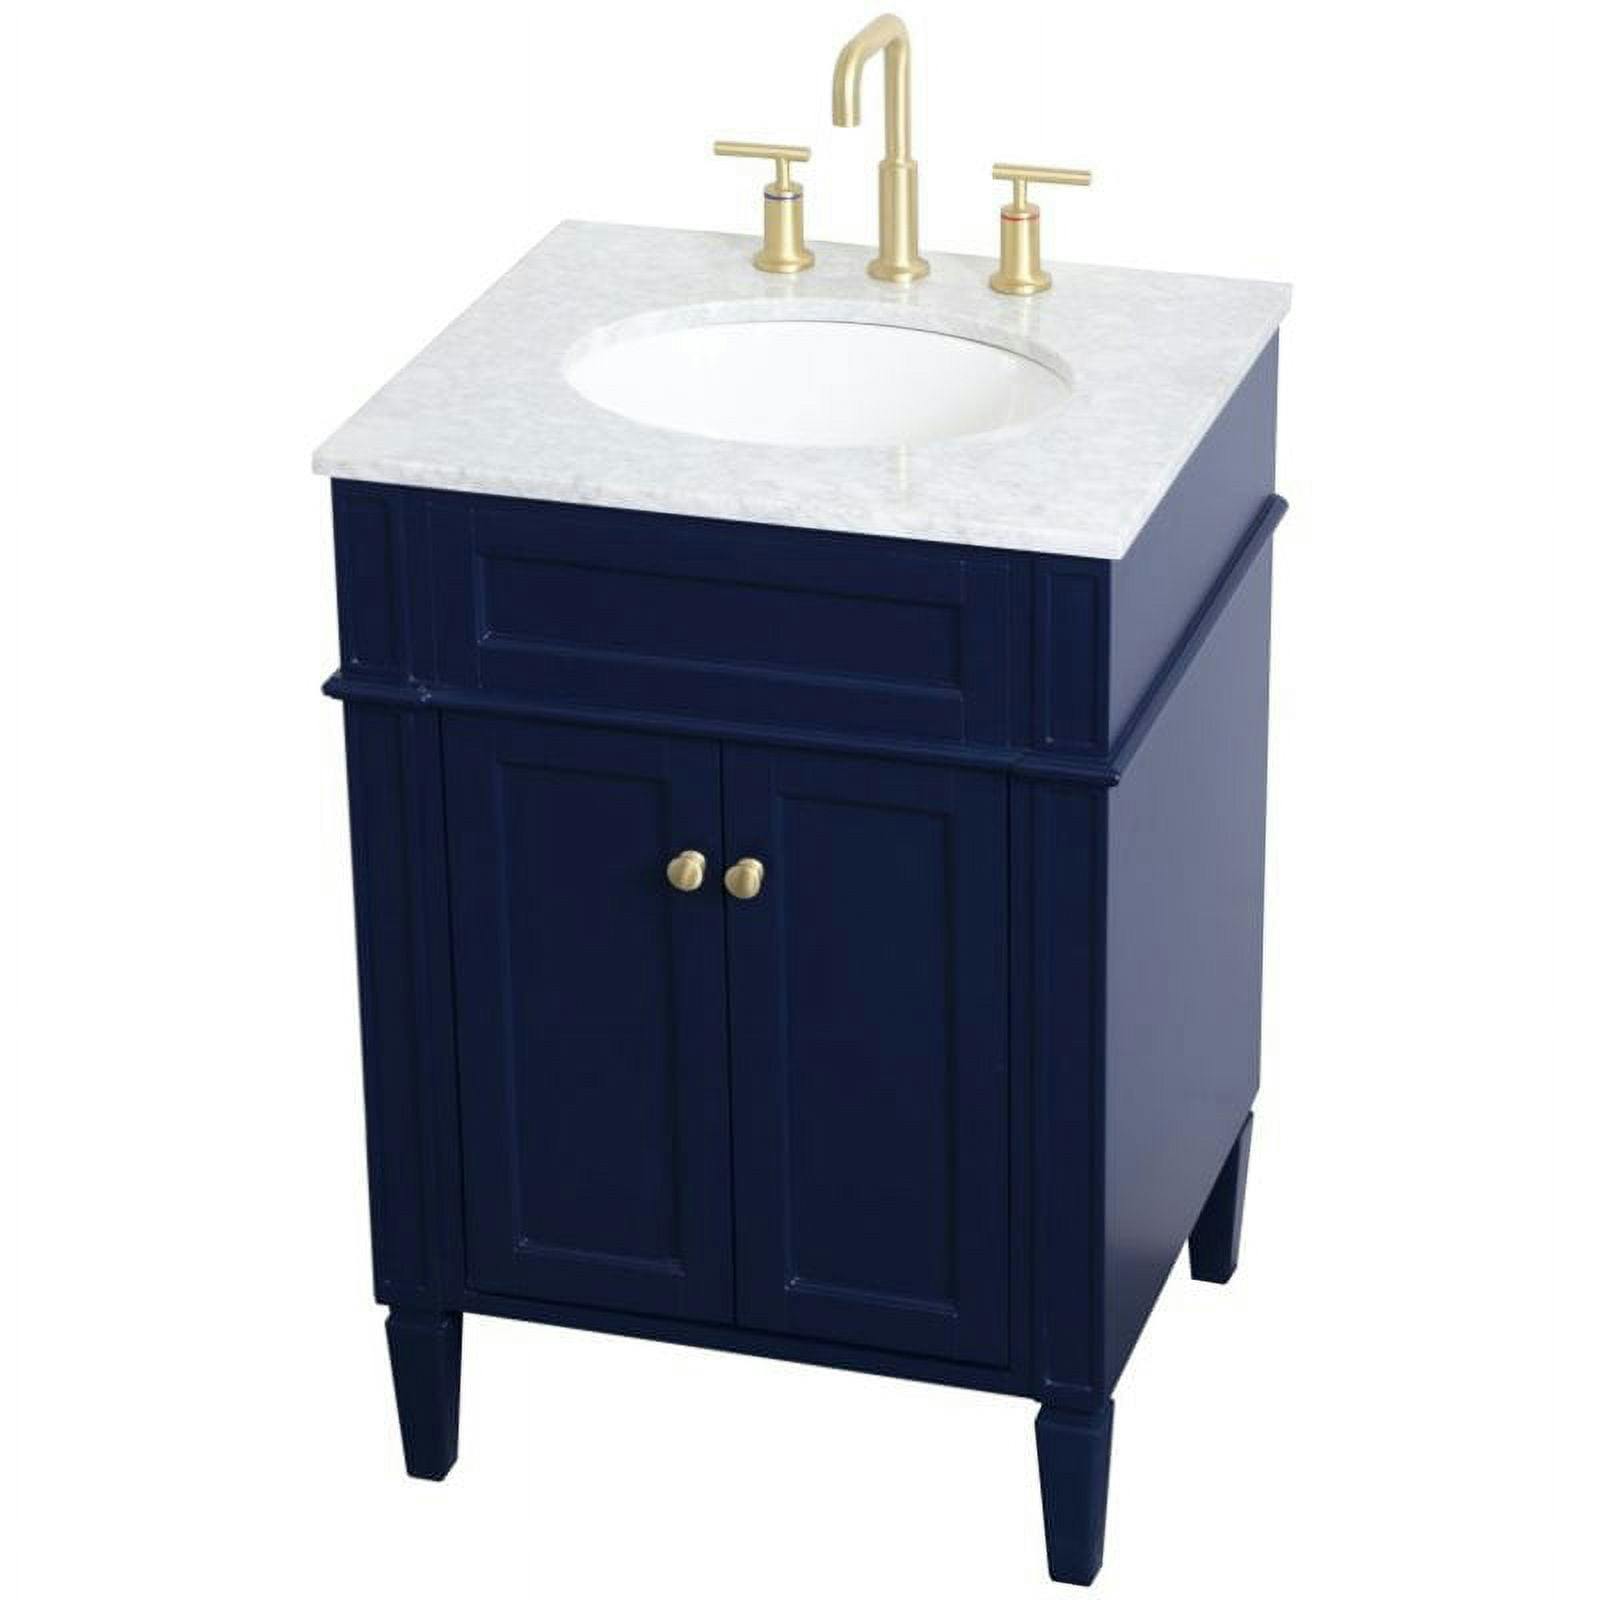 Urbane Blue 24" Single Freestanding Bathroom Vanity with Gold Knobs